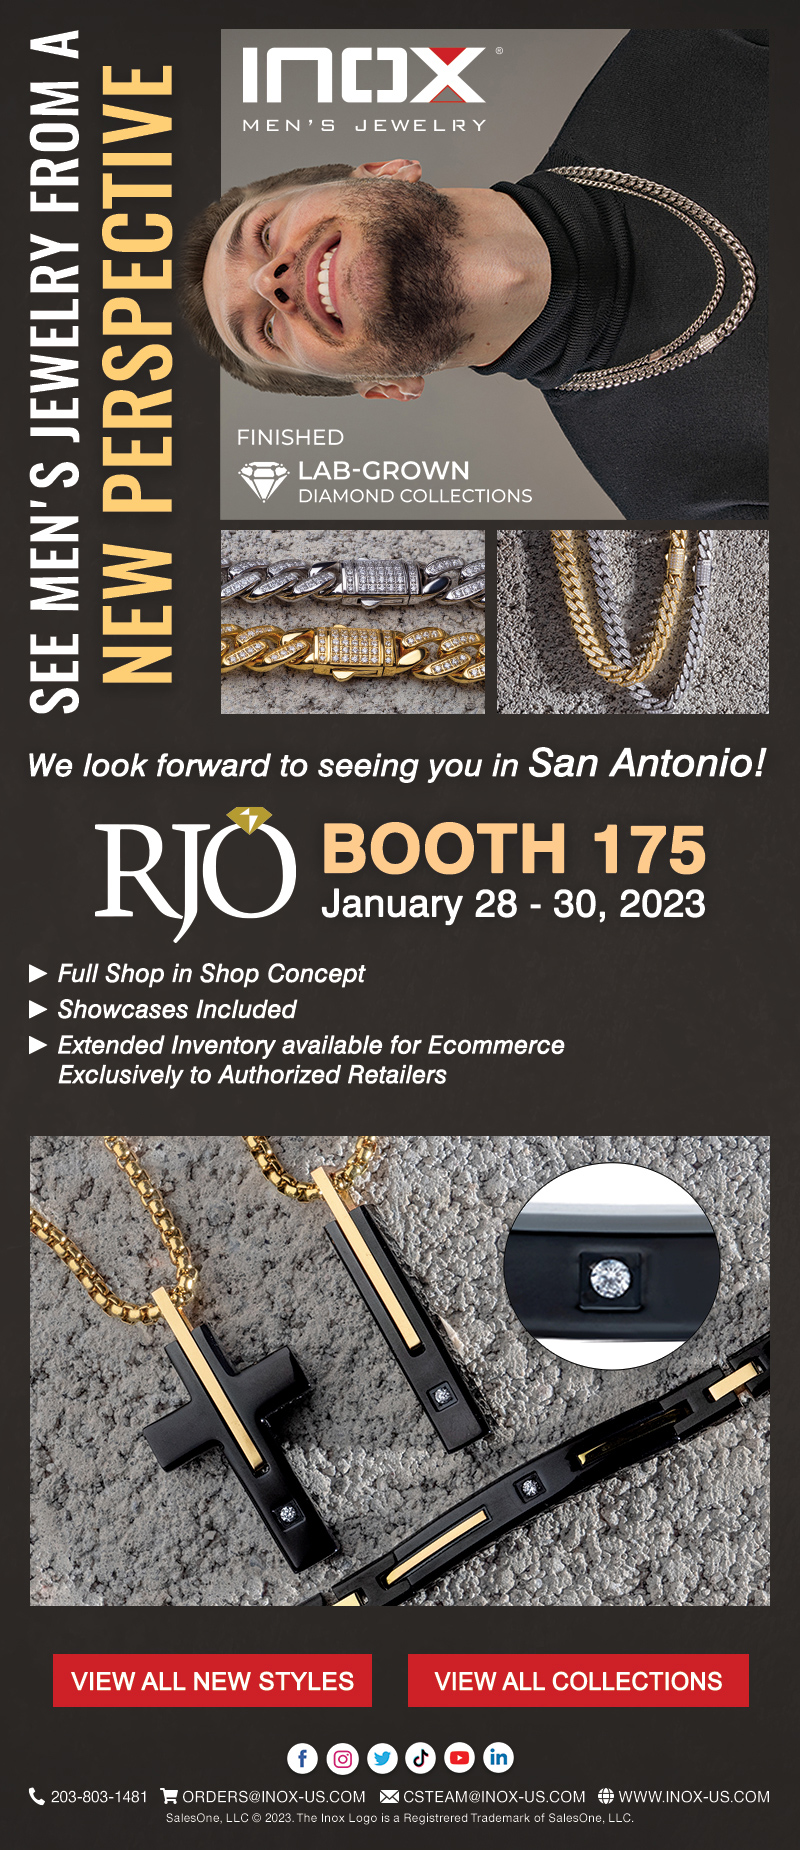 We look forward to seeing you in San Antonio, RJO Booth 175!